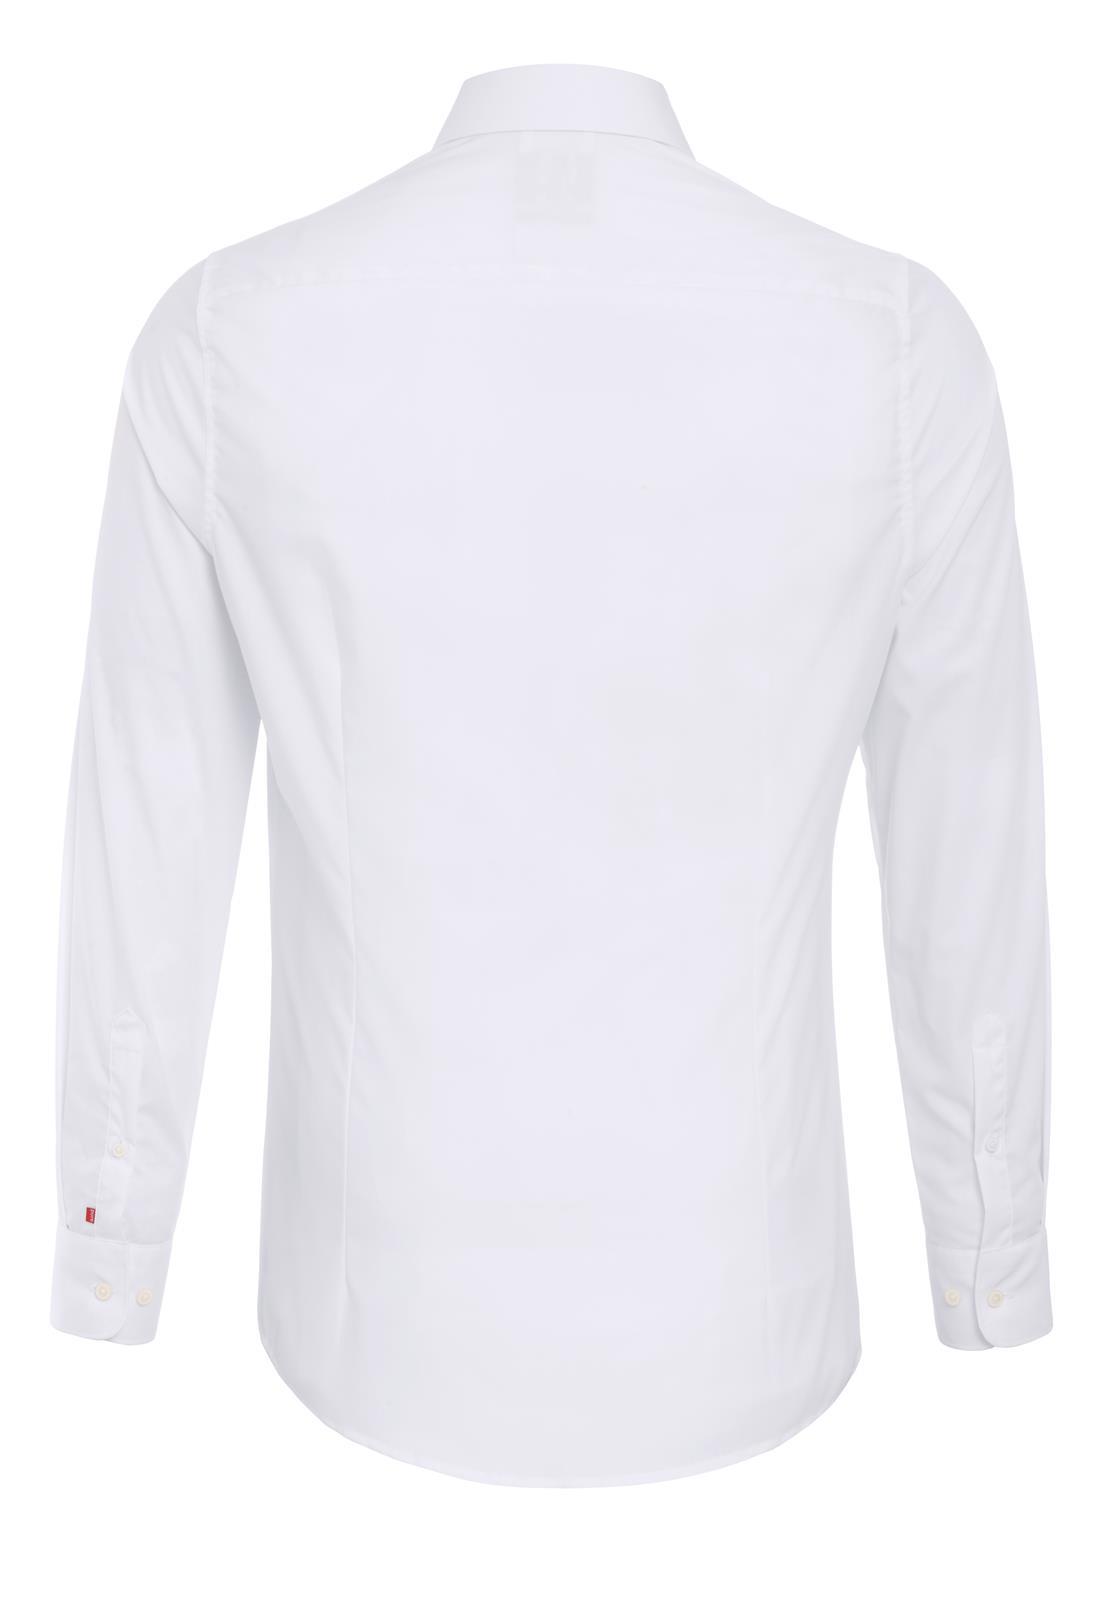 PURE- City Hemd slim fit Langarm (Uni Weiß)